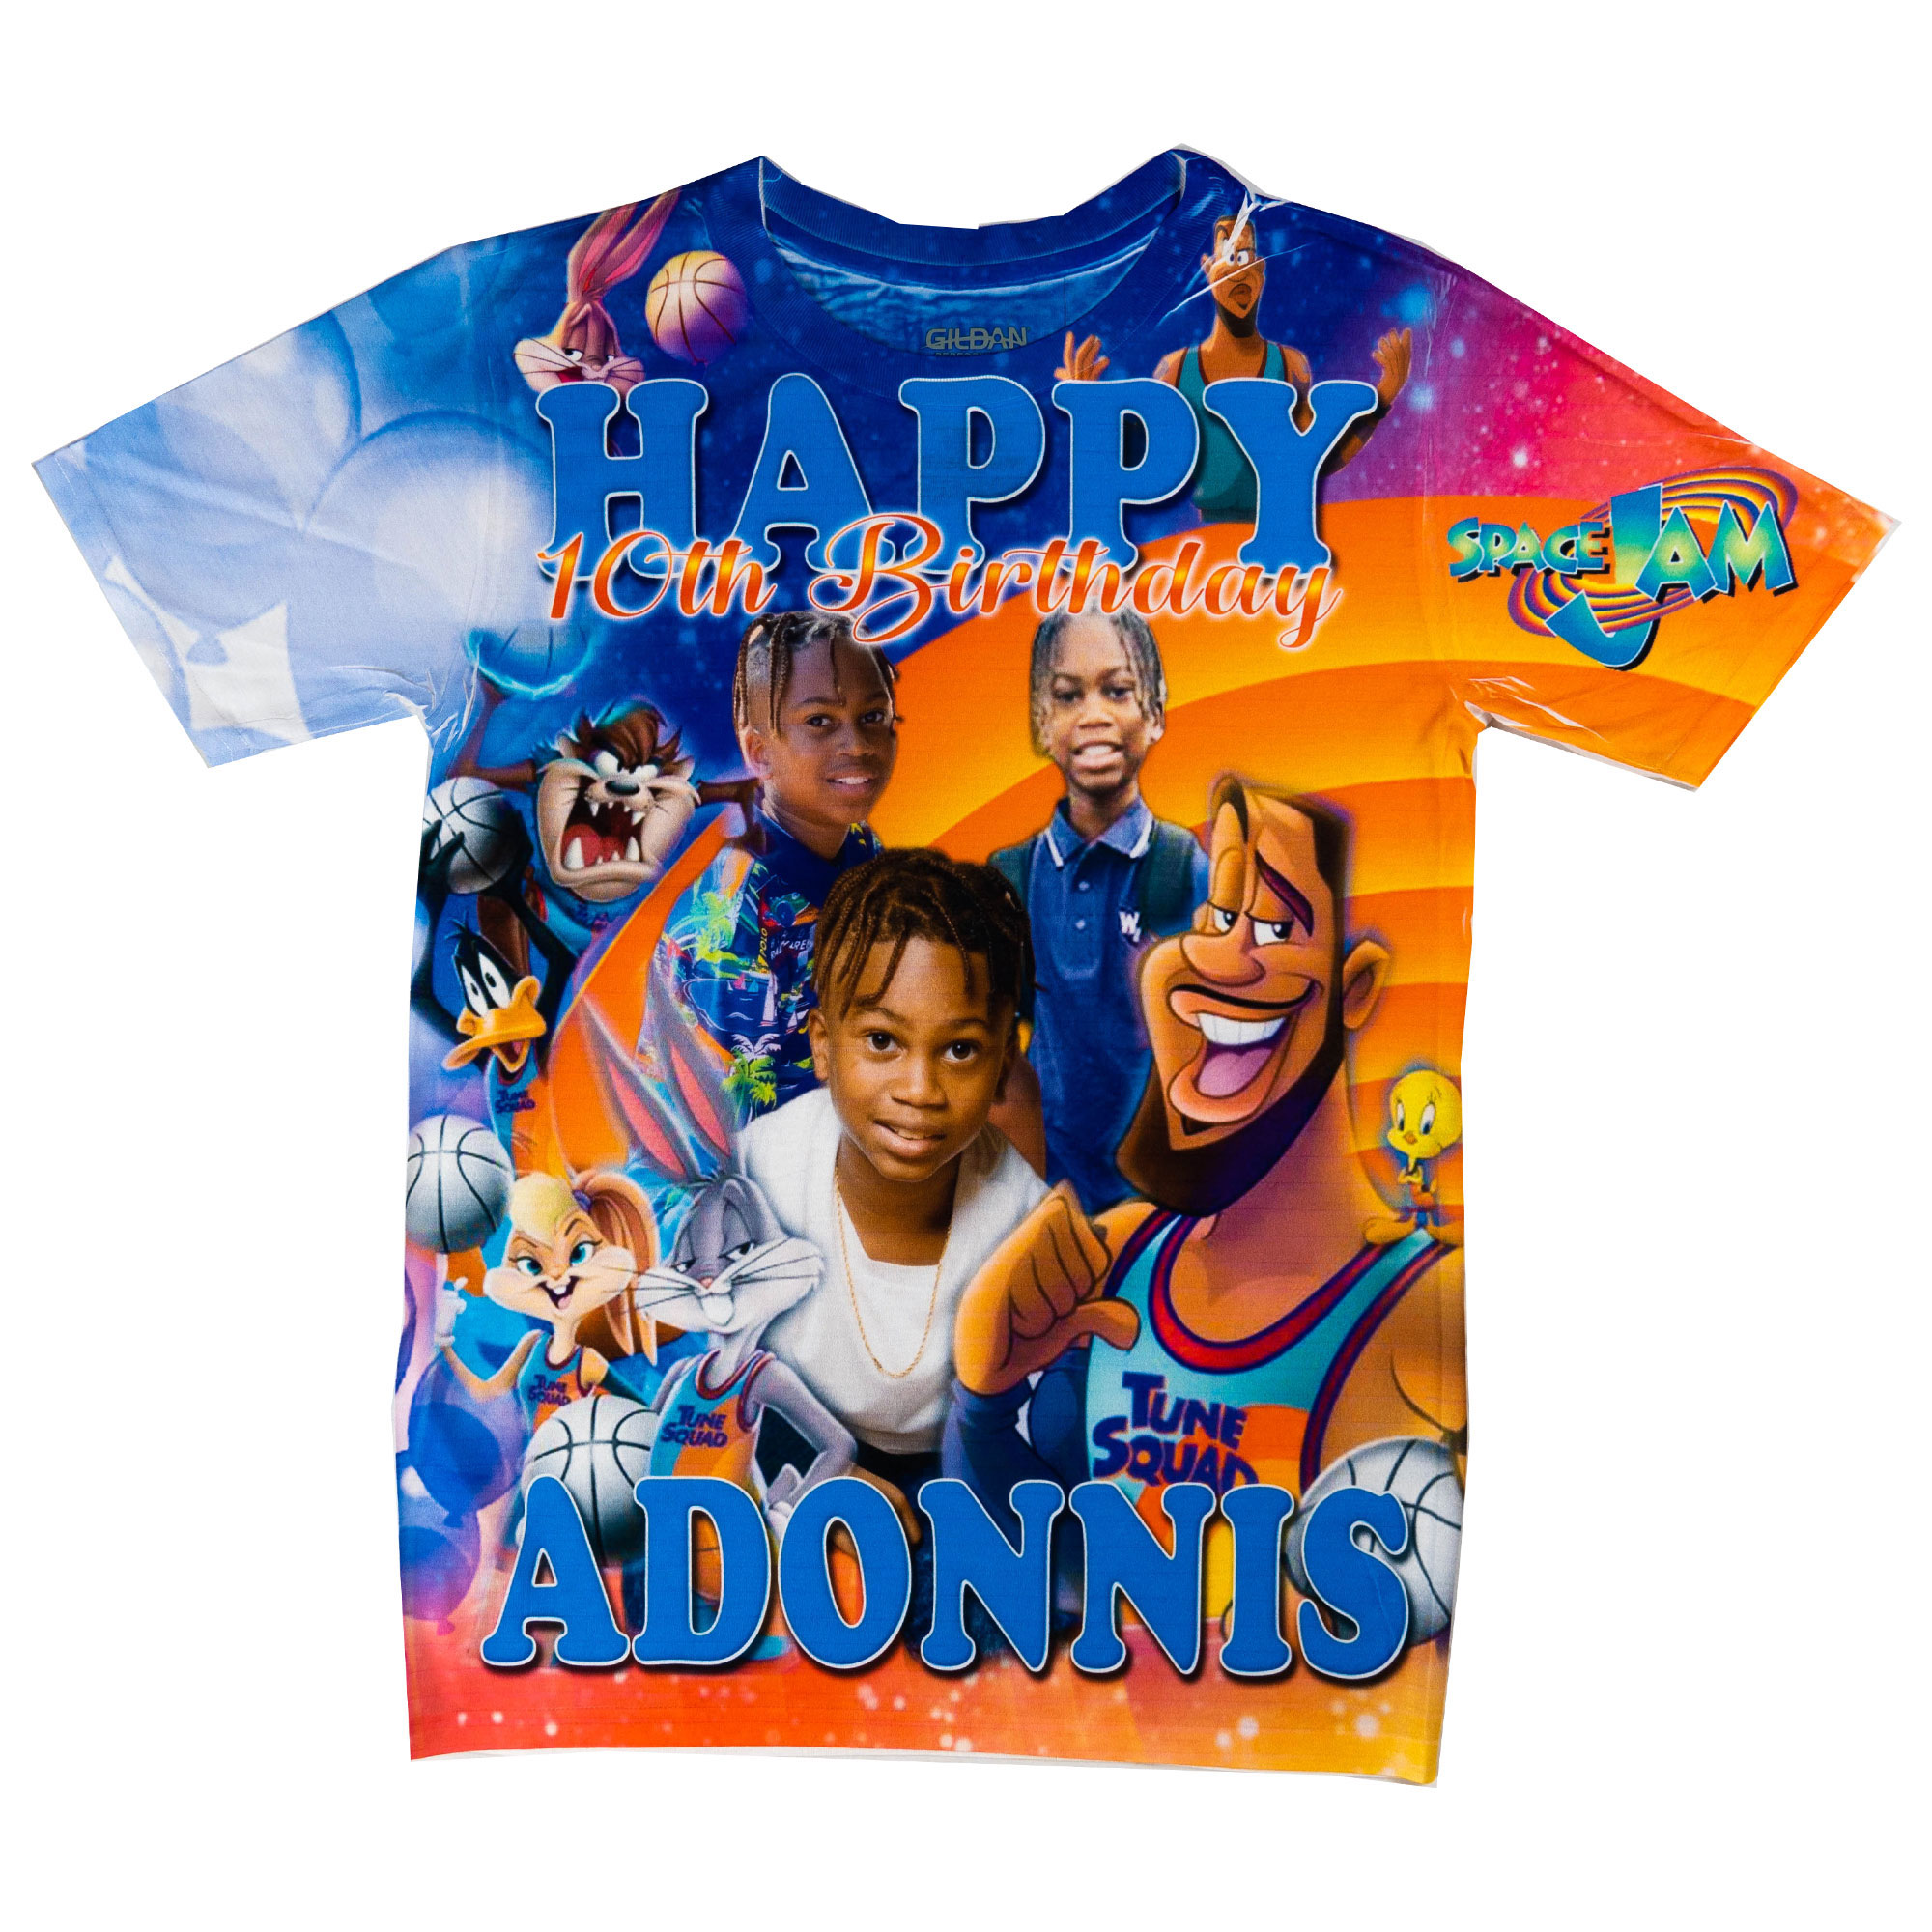 Custom Birthday Shirt – BCustomizedDesigns